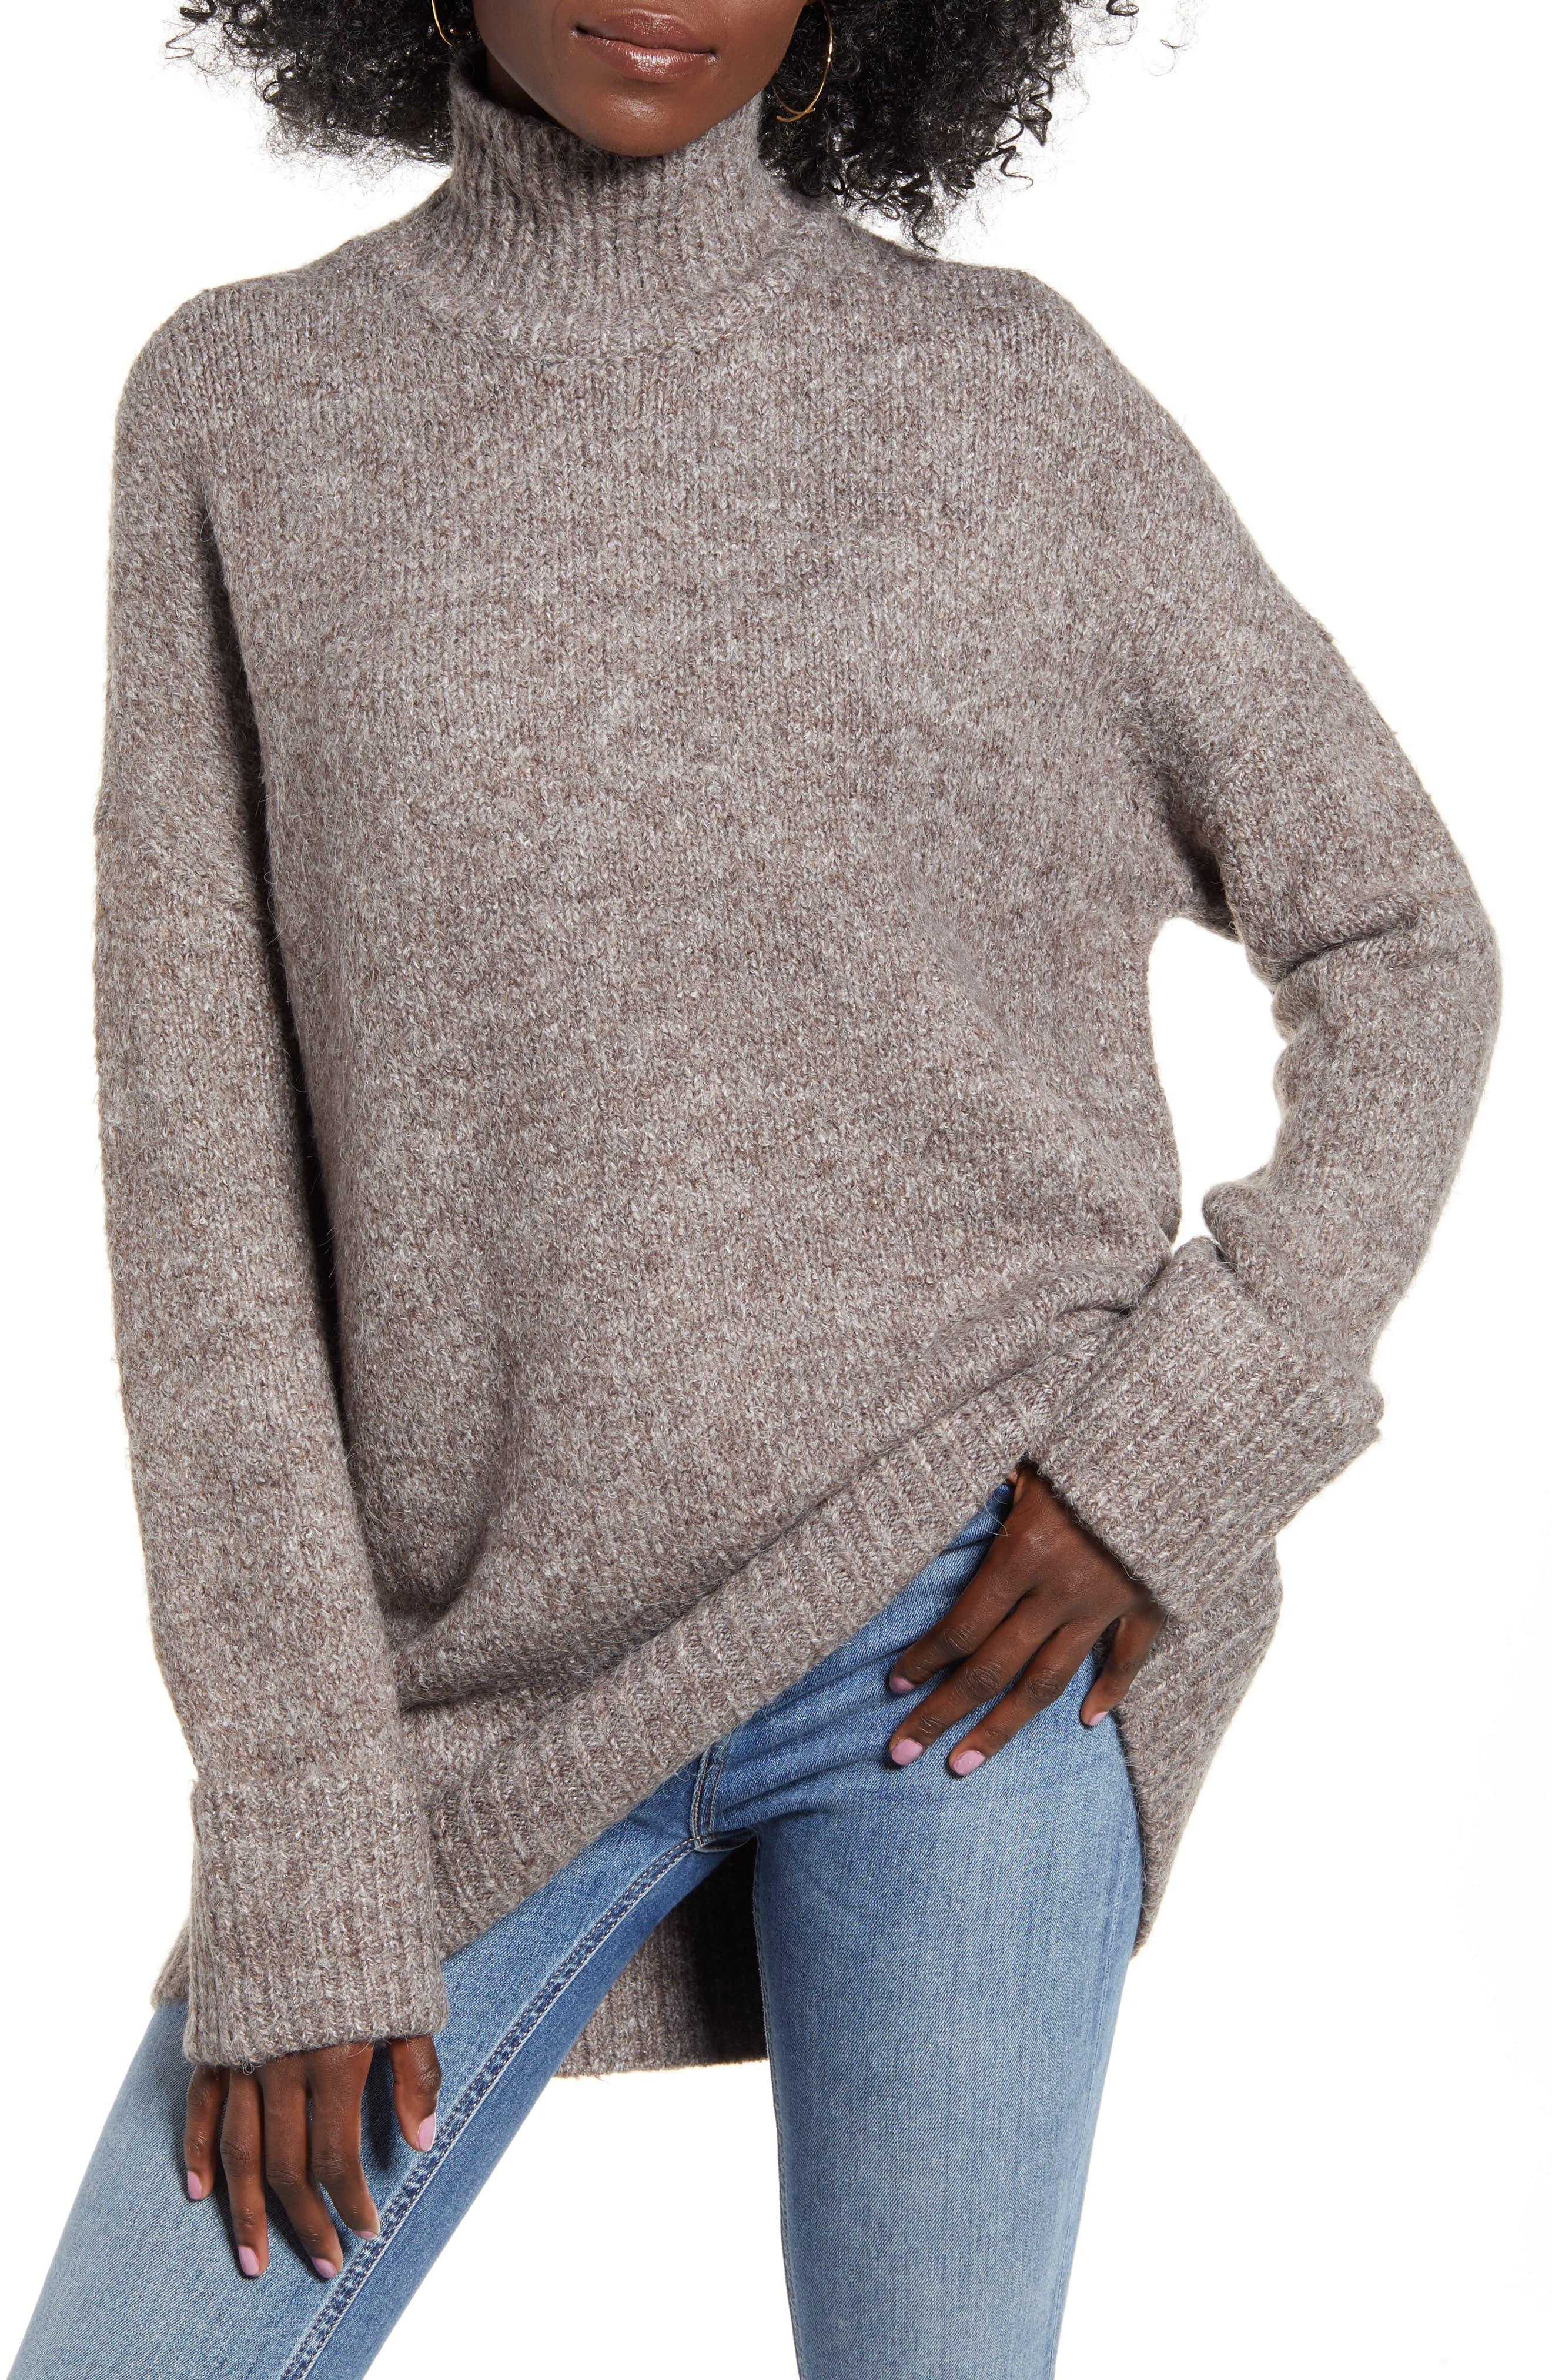 Vero Moda Berko Turtleneck Sweater in Gray - Lyst